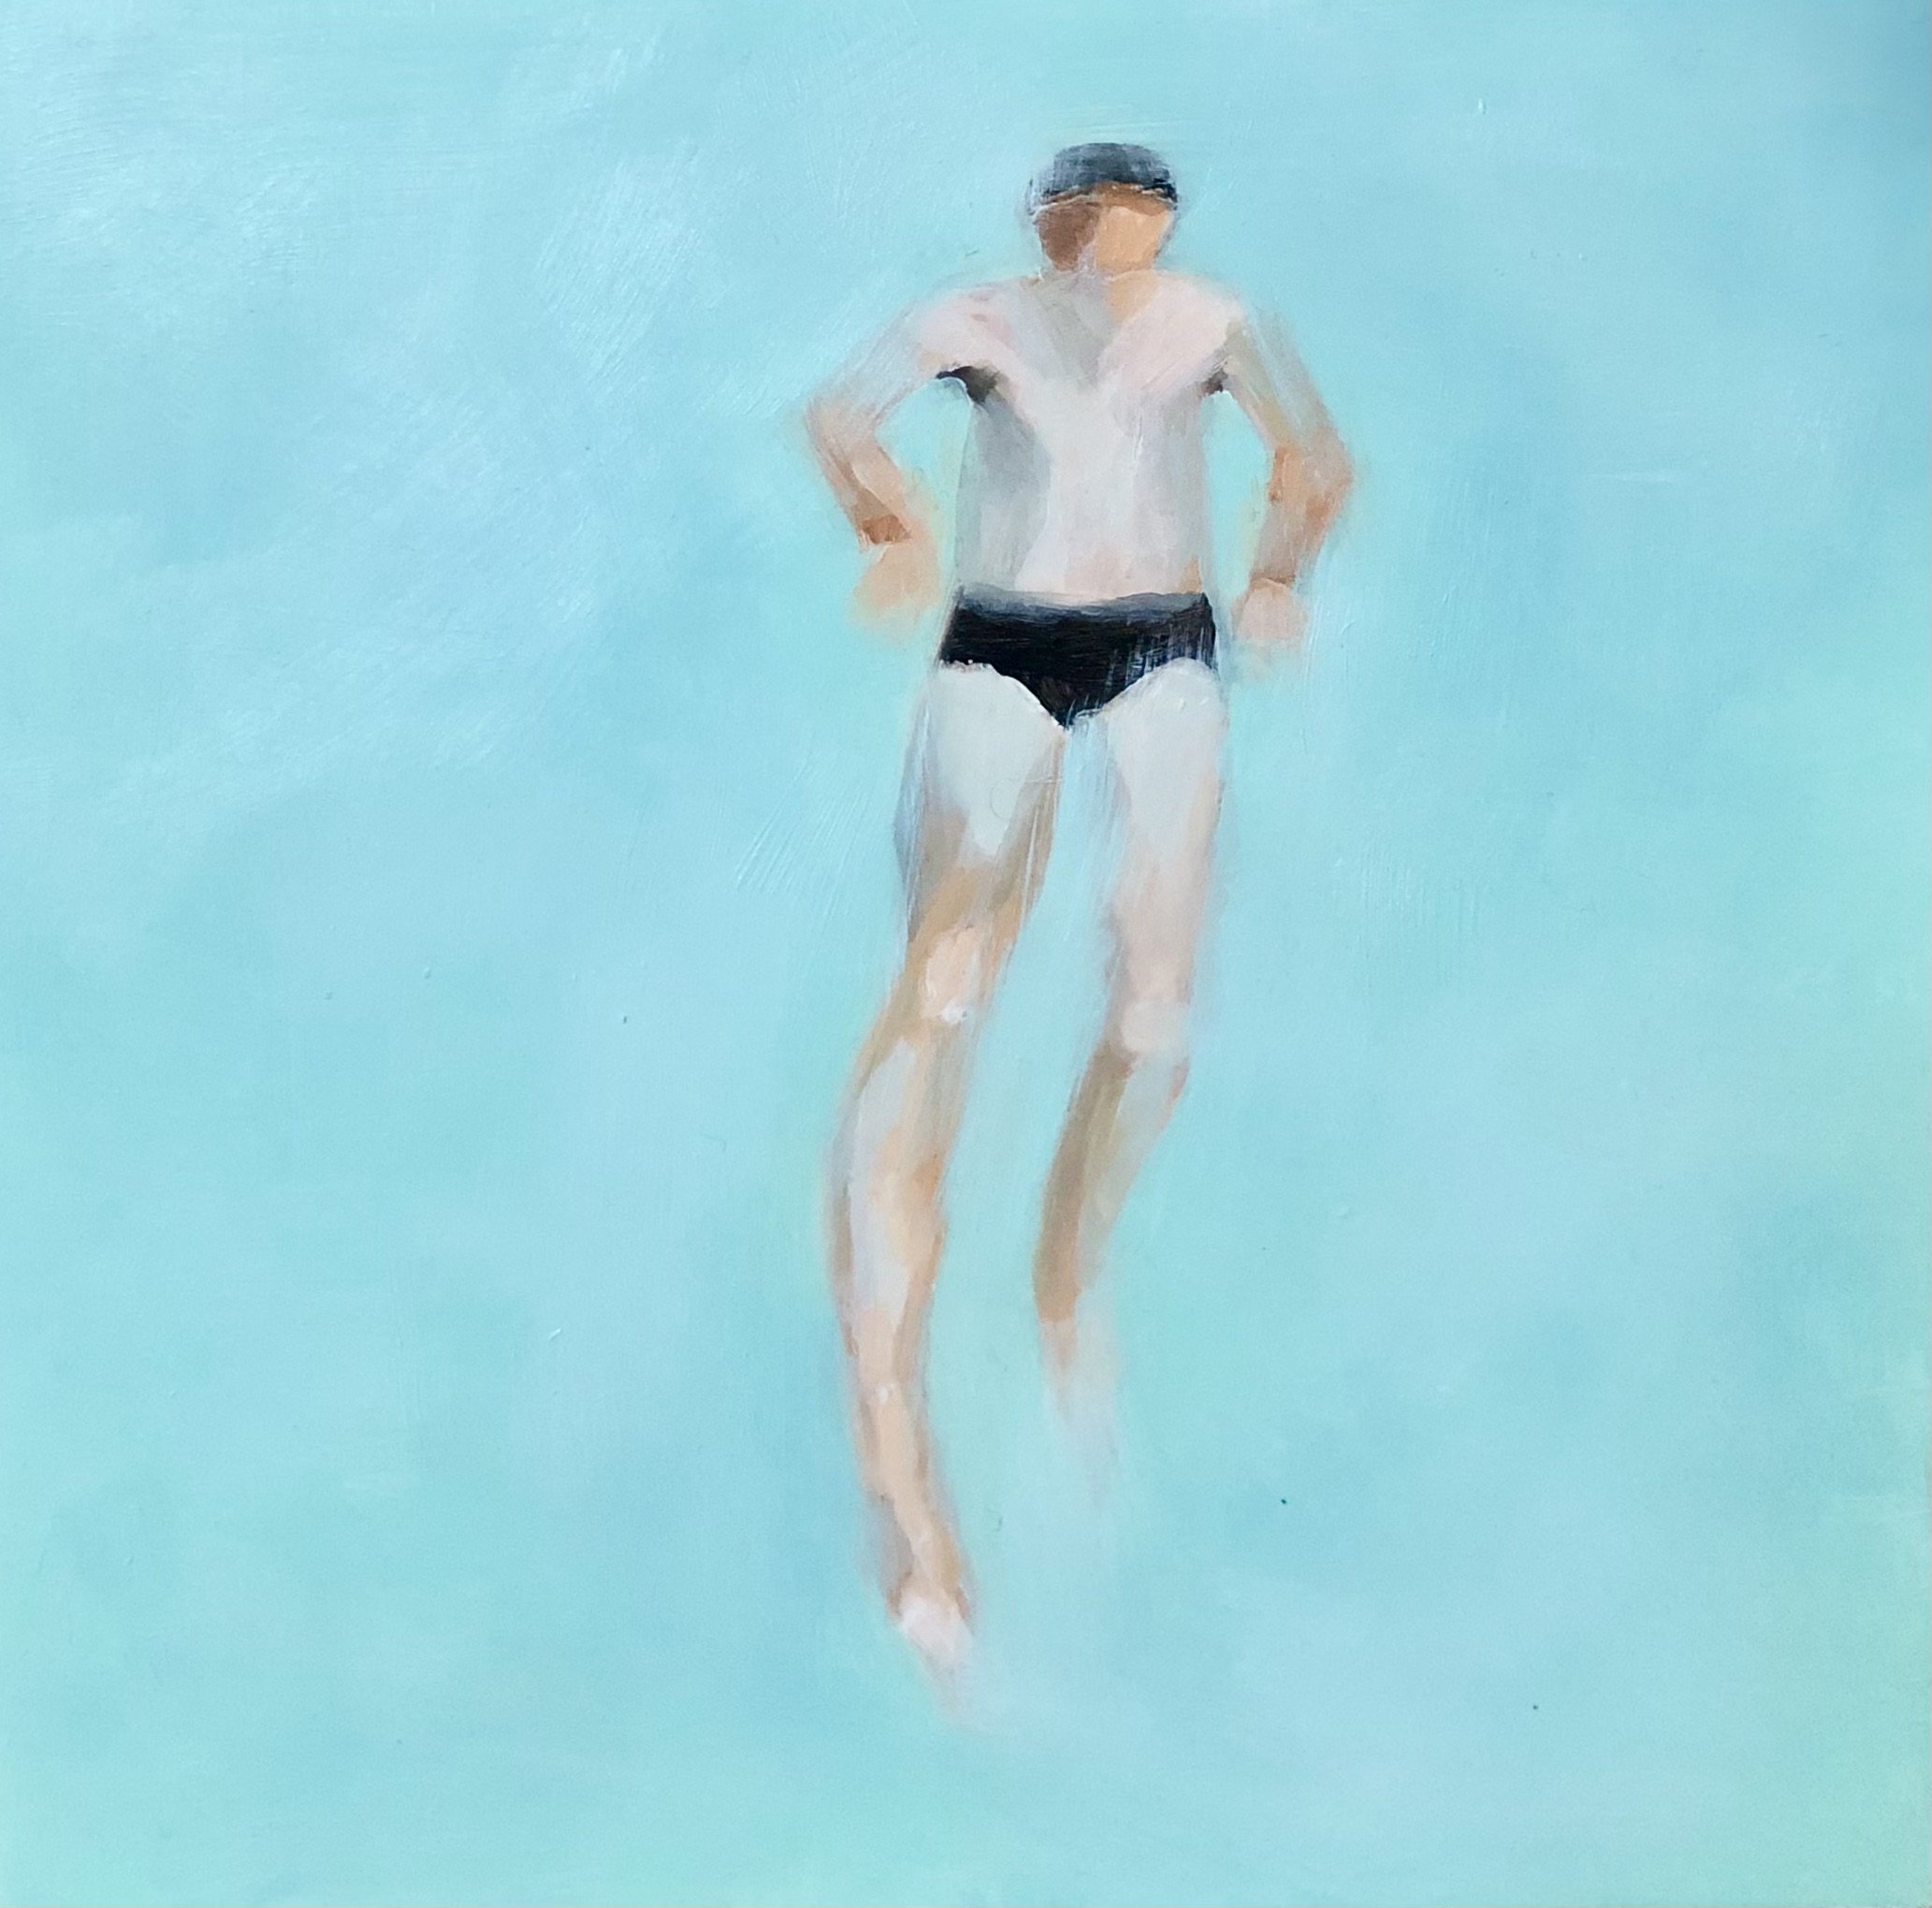 Austin Swimmer 1 by Carla Roth